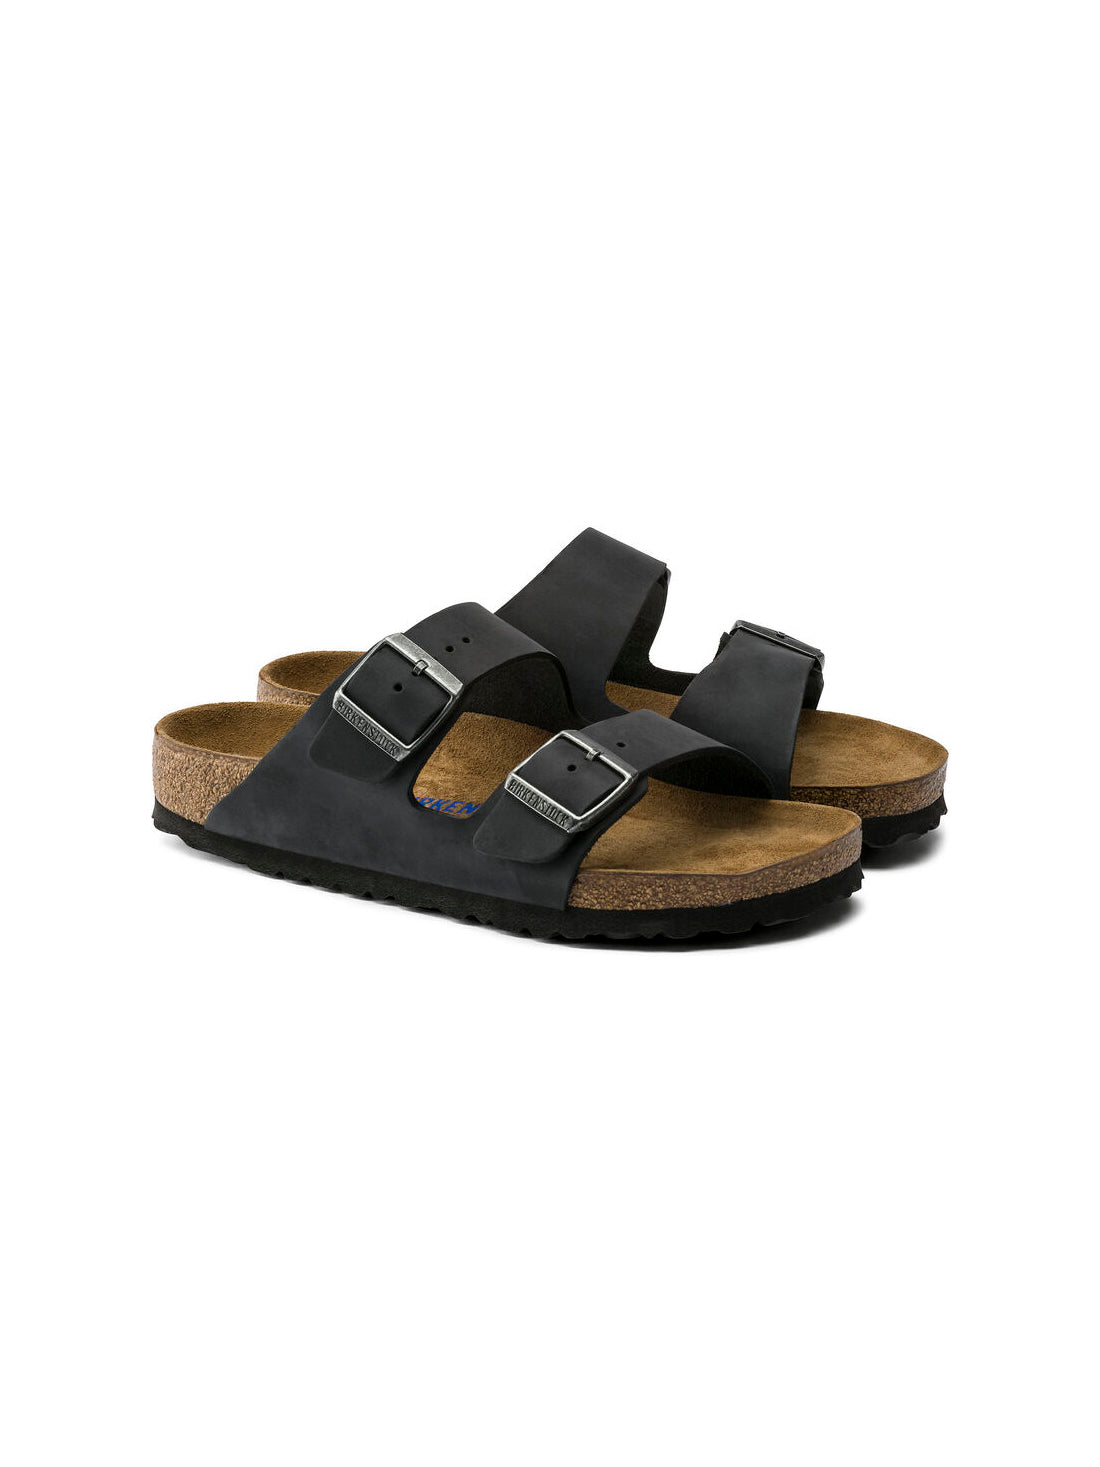 birkenstock arizona soft footbed sandal in oiled leather black